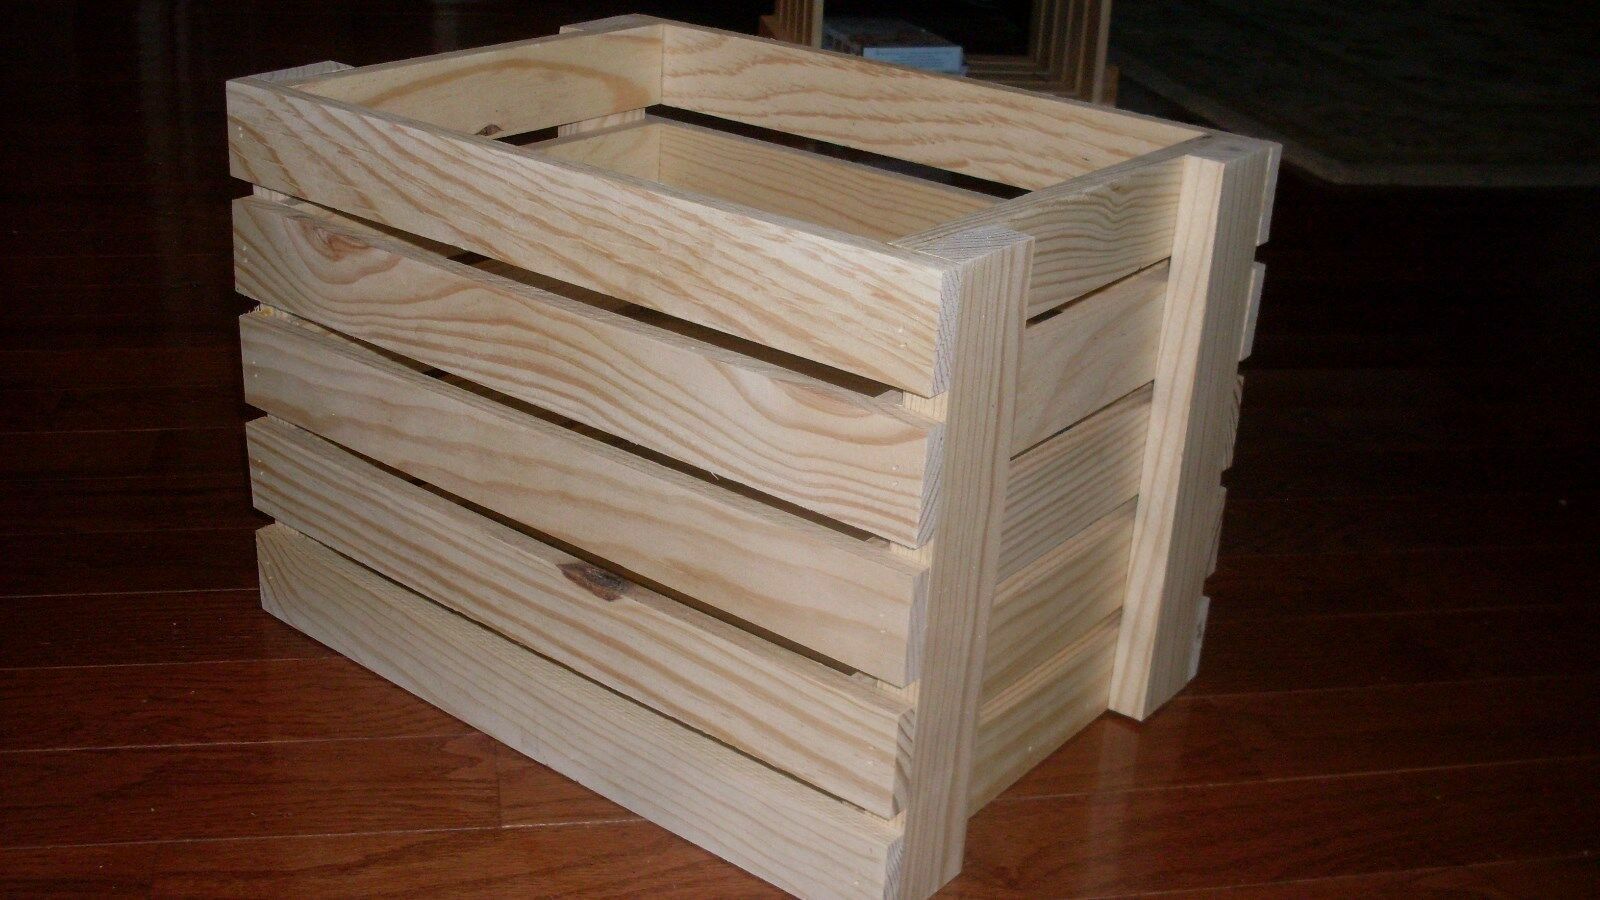  Large Storage Wood Crate